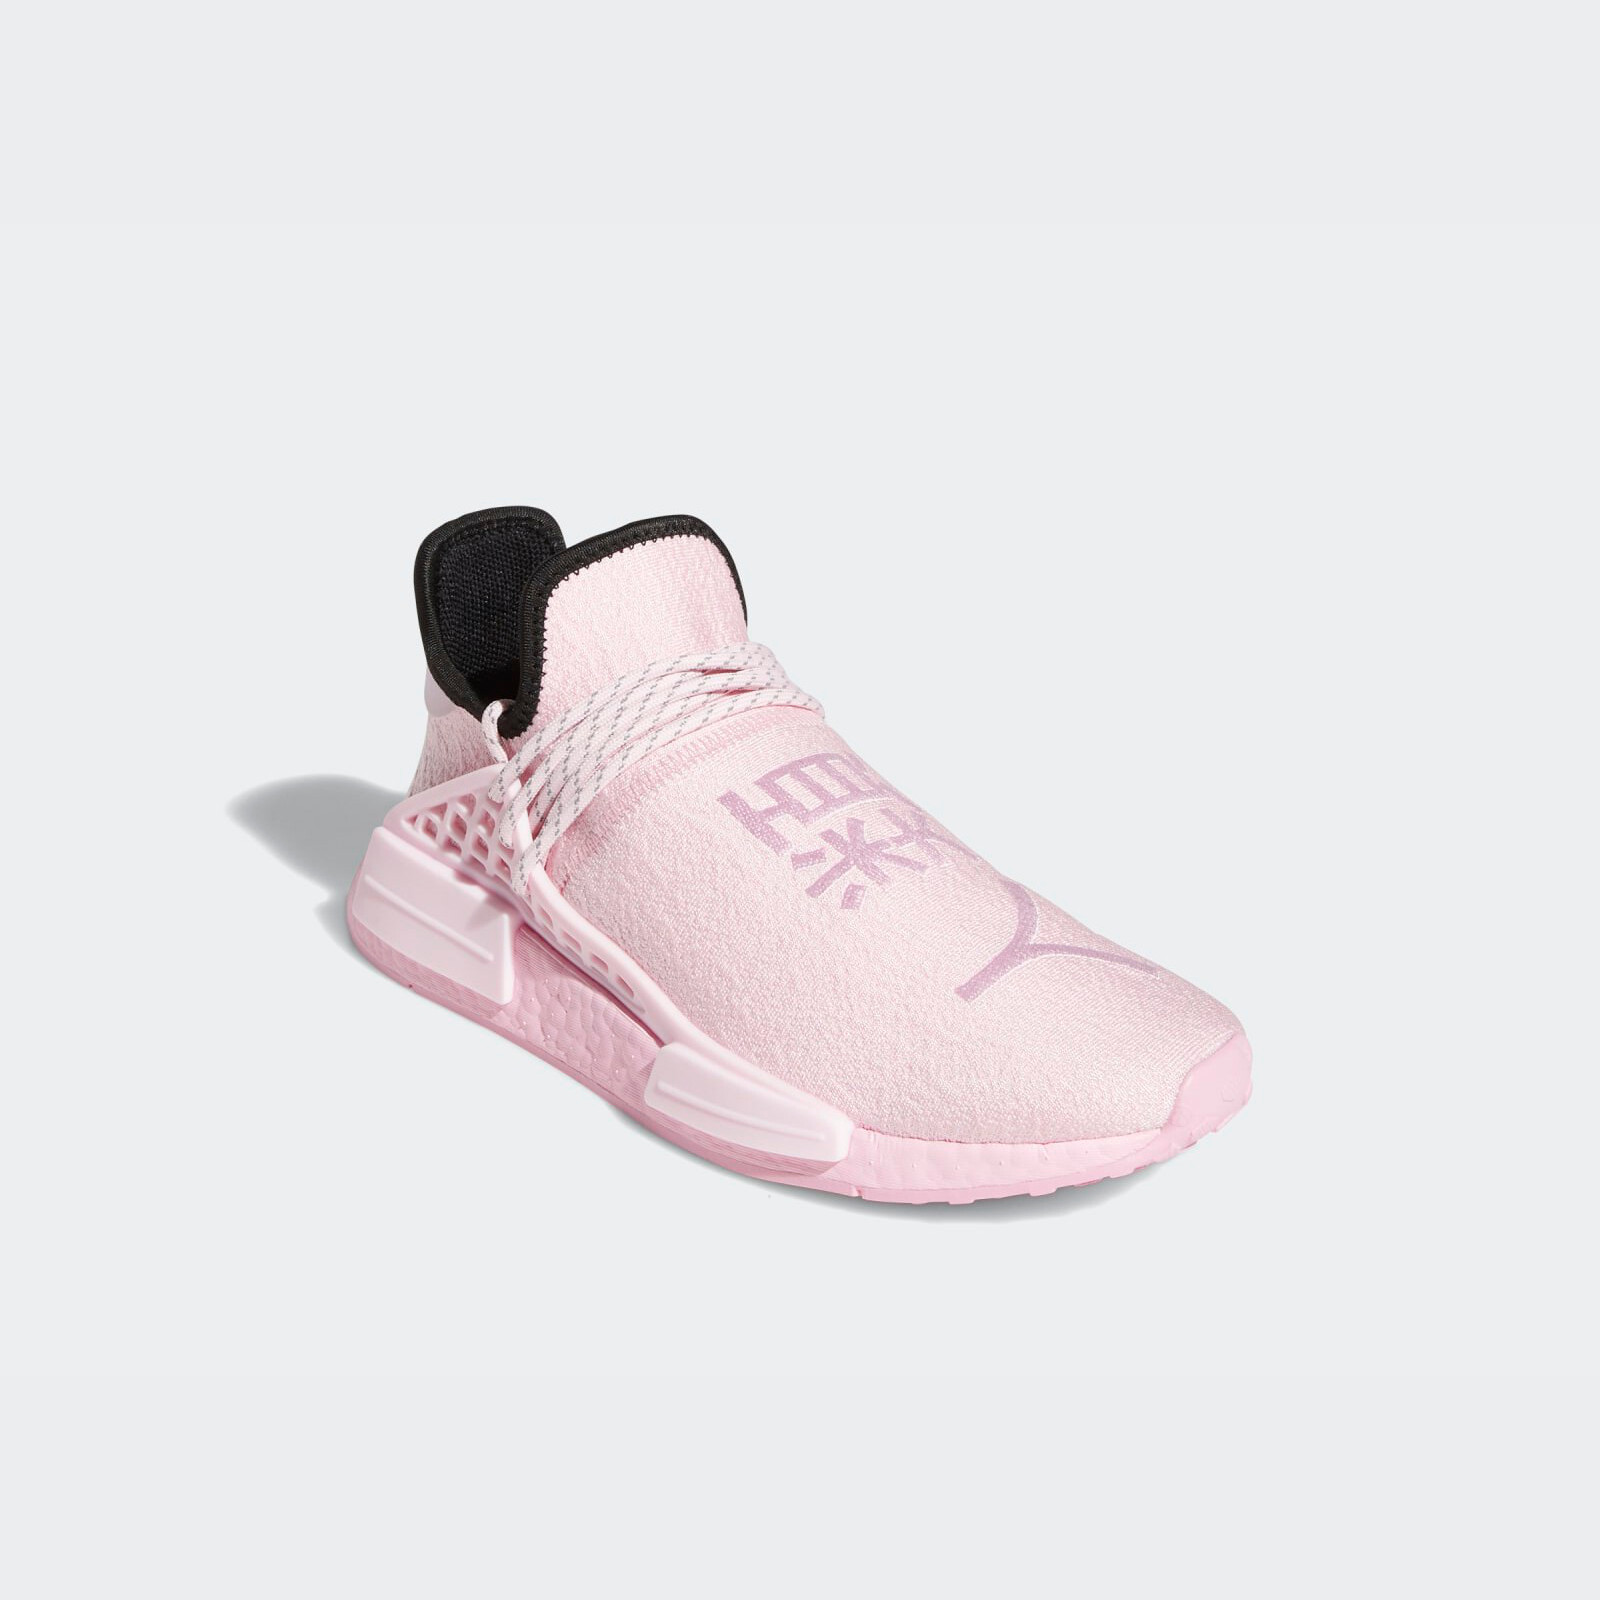 Pharrell Williams x Adidas
HU NMD Pink